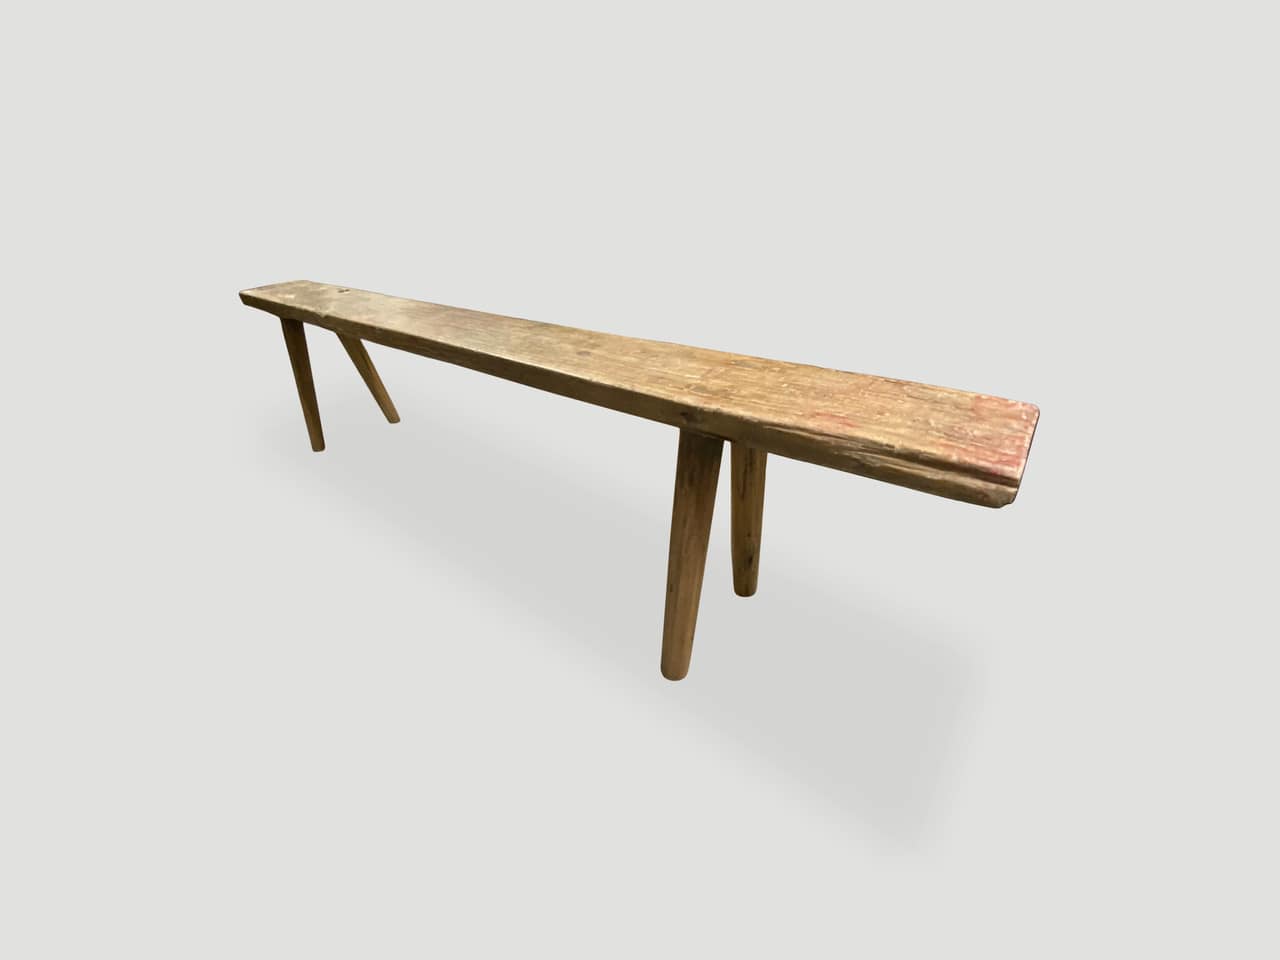 natural aged teak wood bench